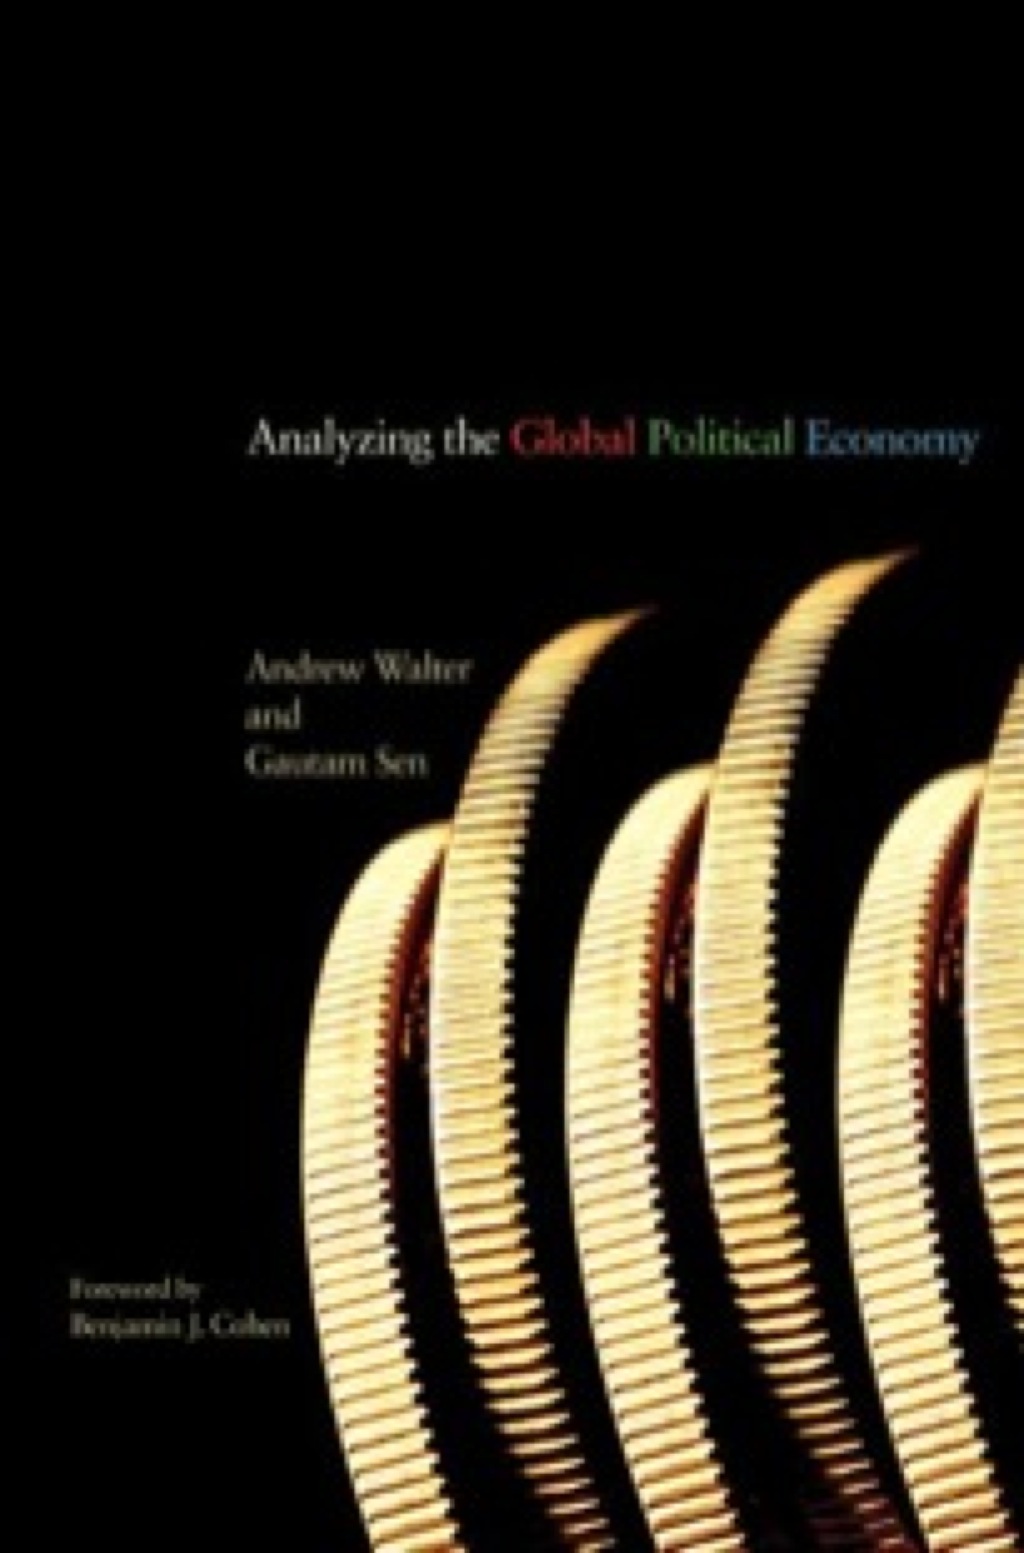 Analyzing the Global Political Economy (eBook) - Andrew Walter; Gautam Sen,